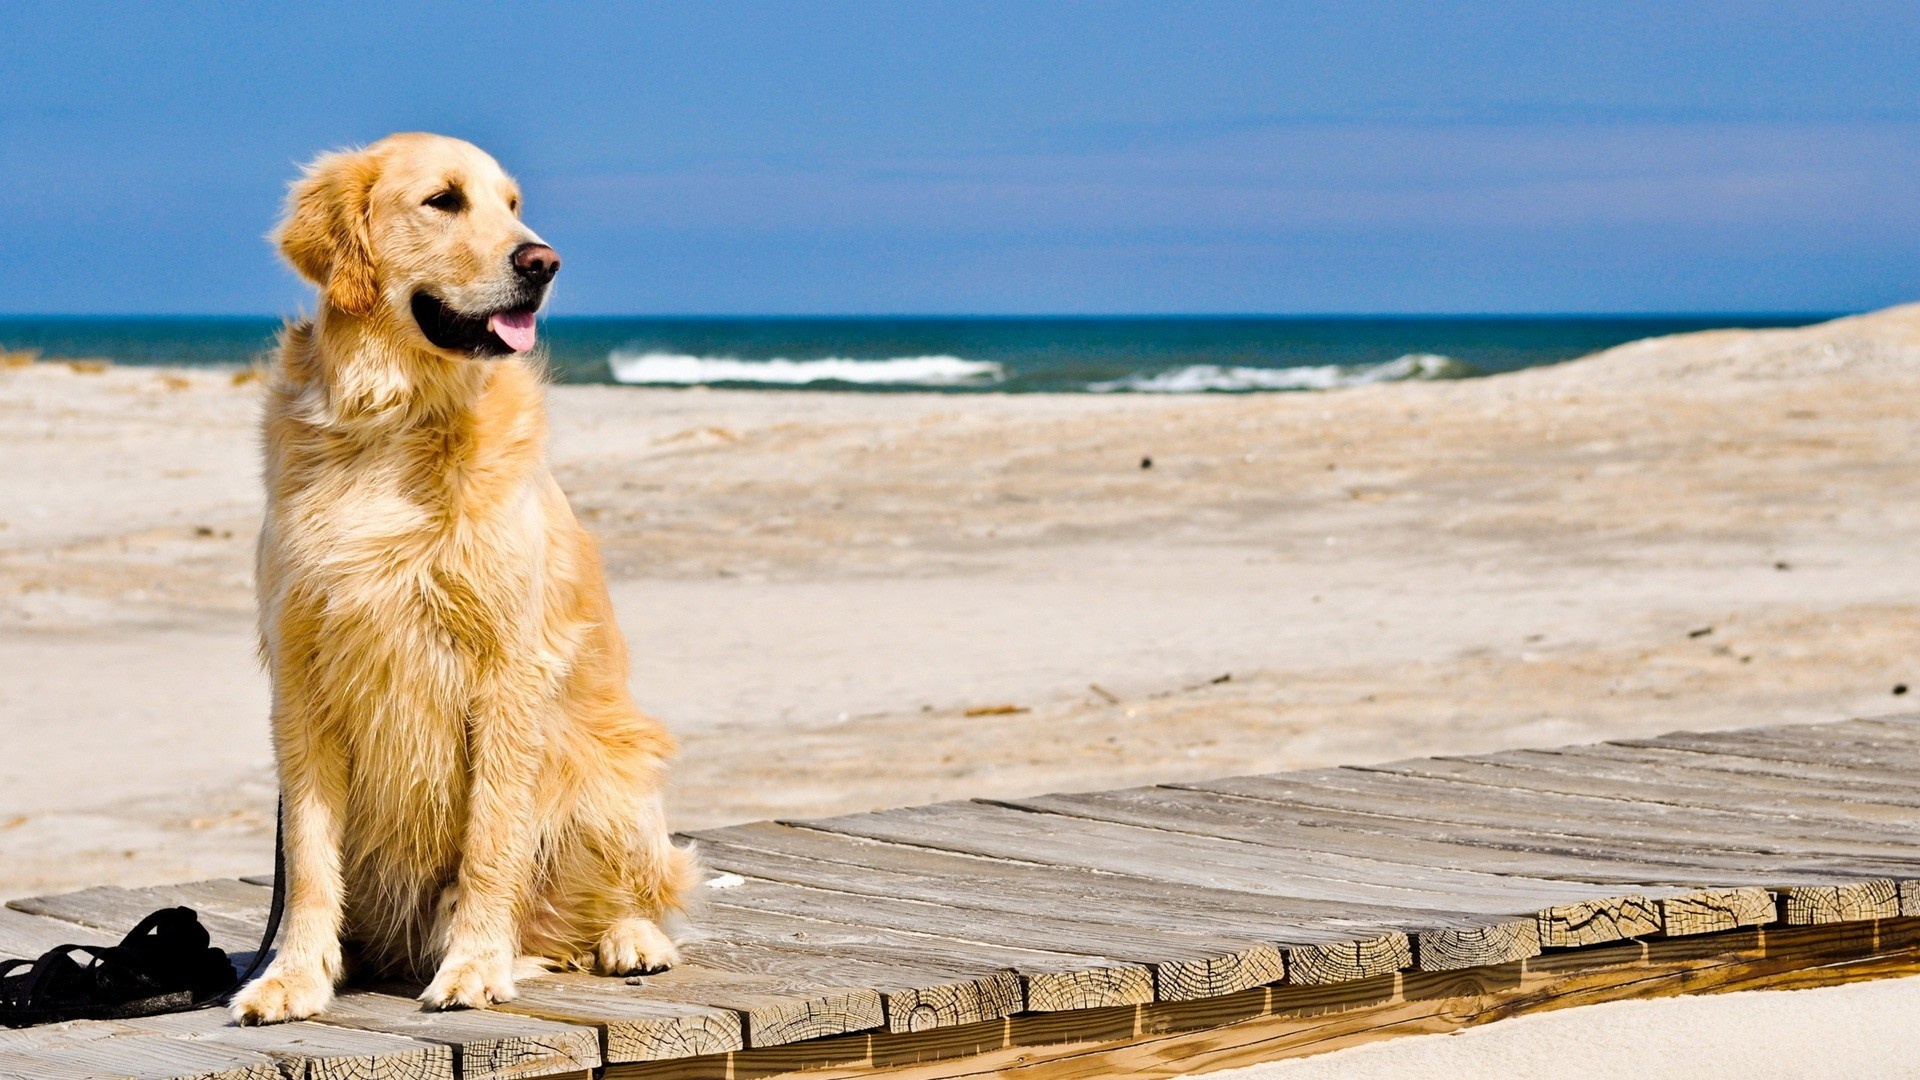 Dog On The Beach free image